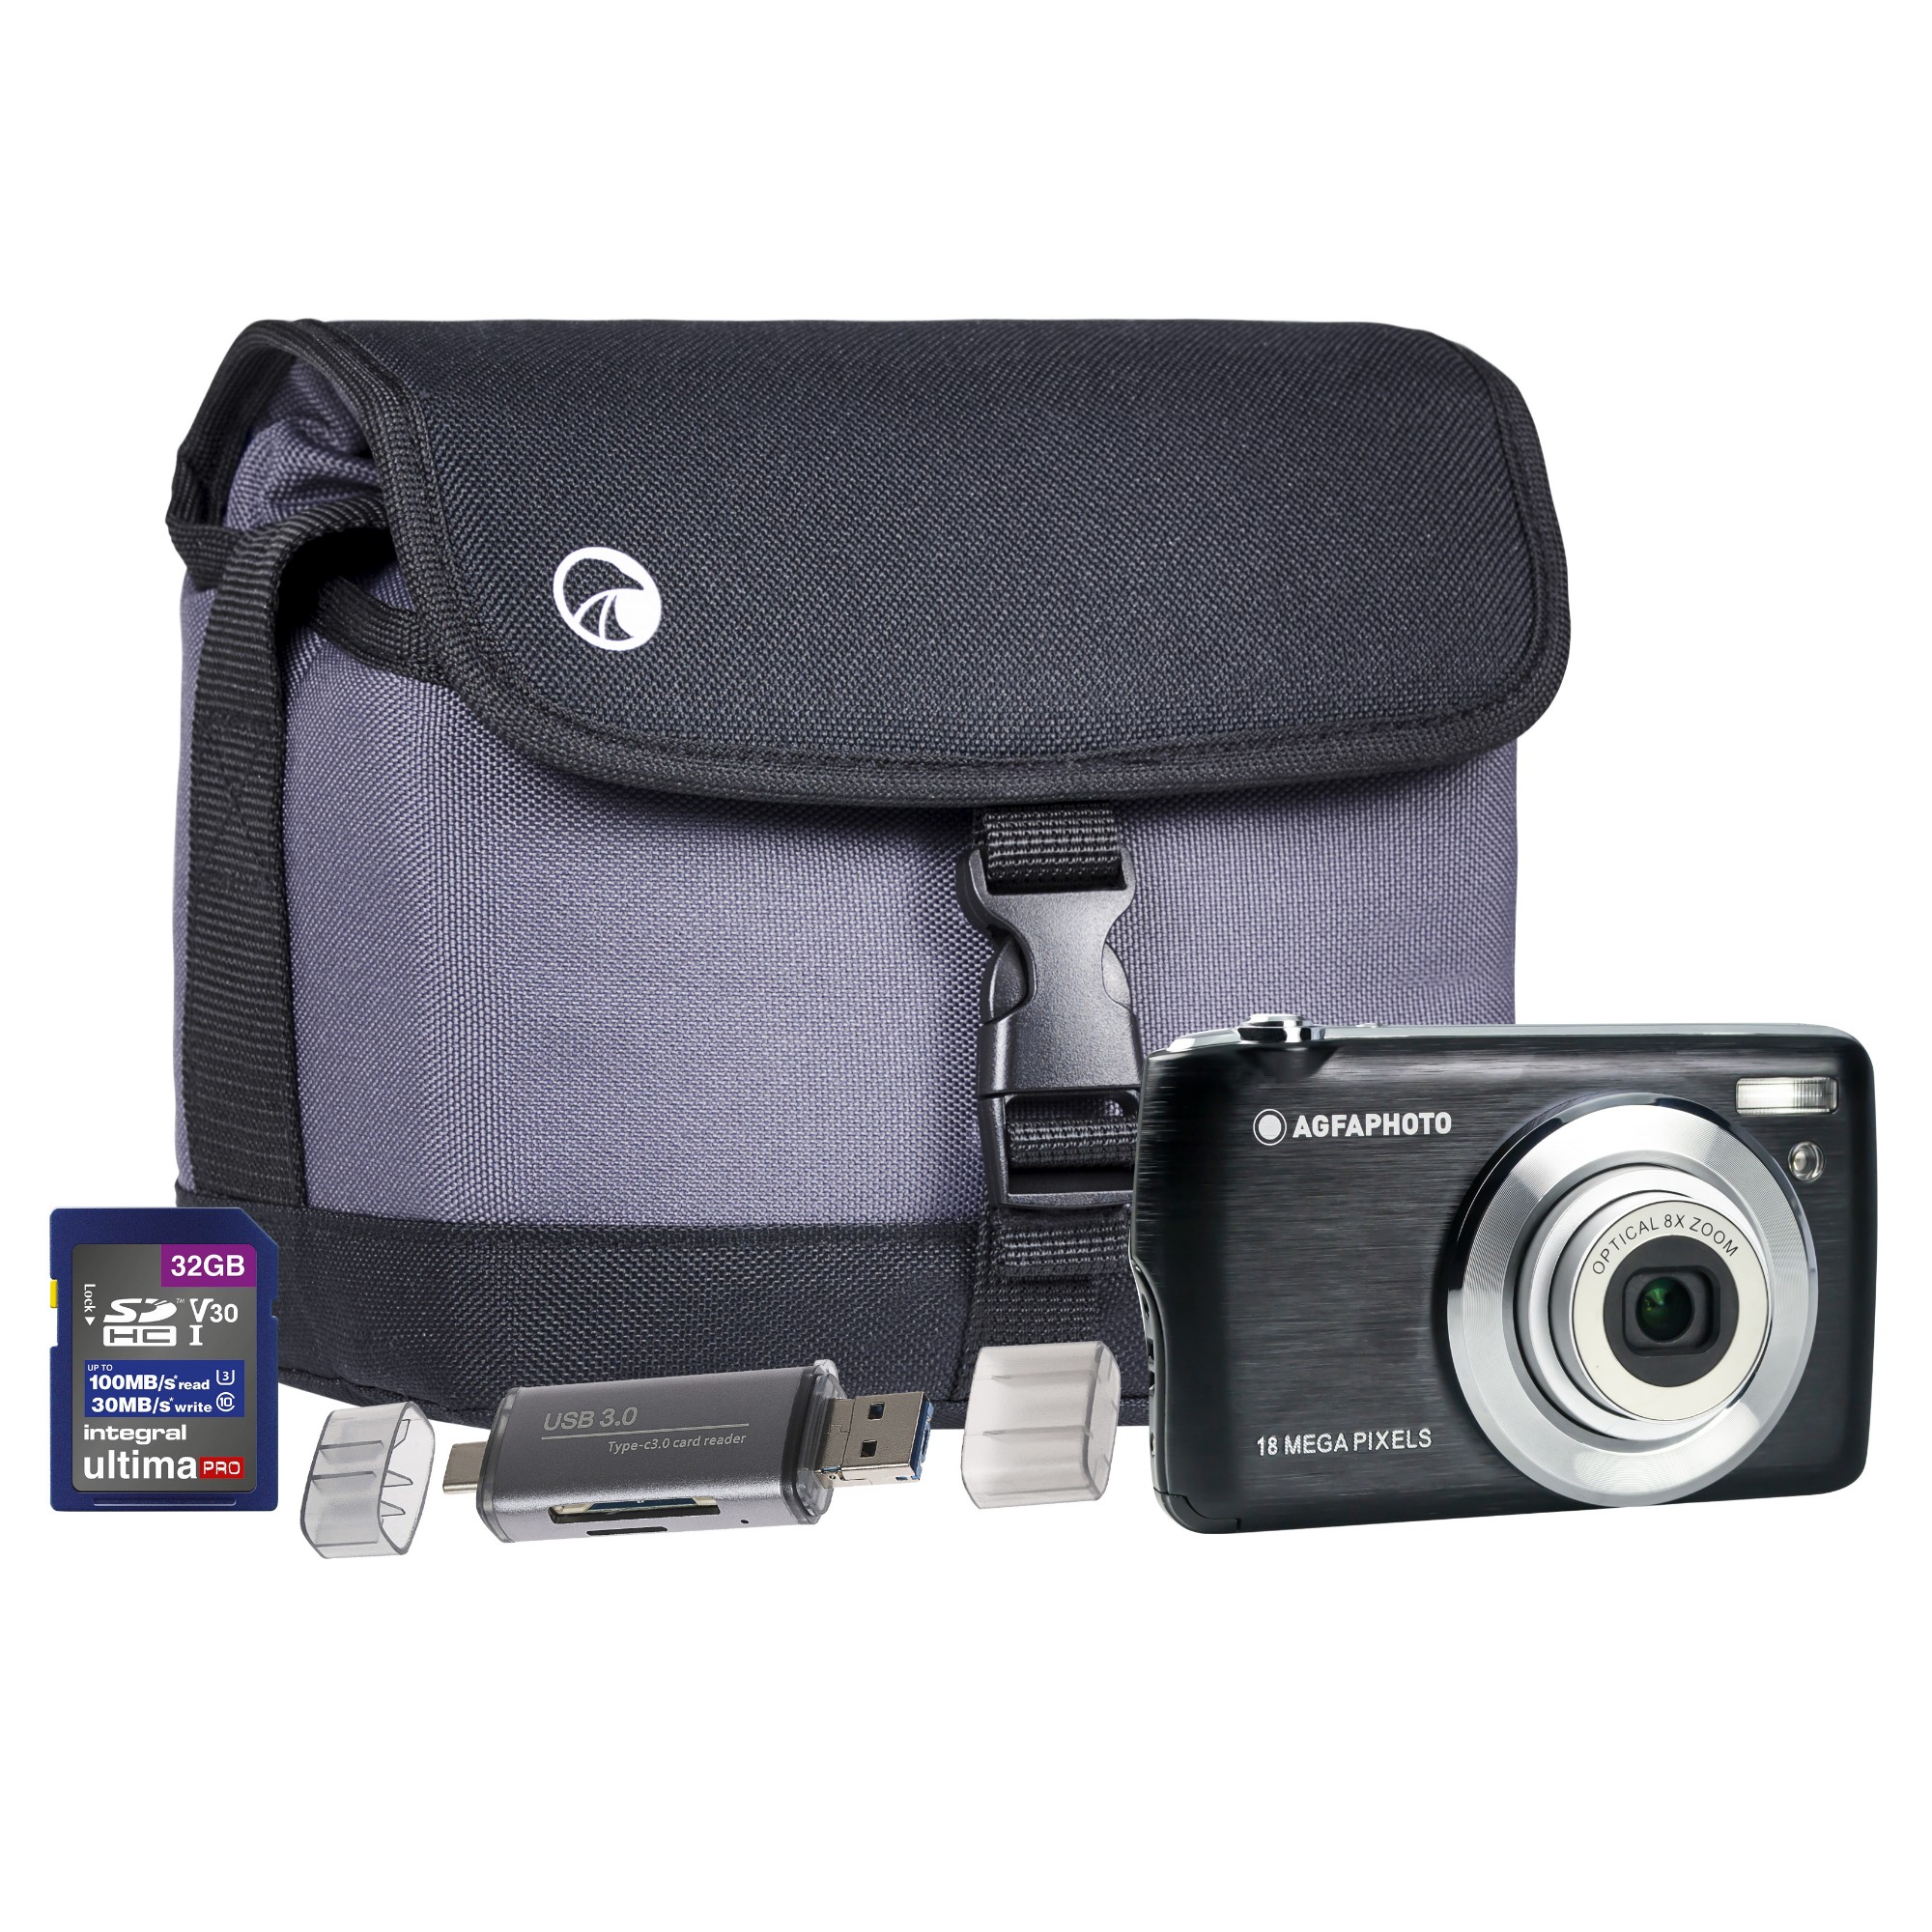 DC8200BK-KIT2 AGFA Photo Realishot DC8200 Compact Digital Camera Kit with 32GB SD, Card Reader & Shoulder Bag - Black